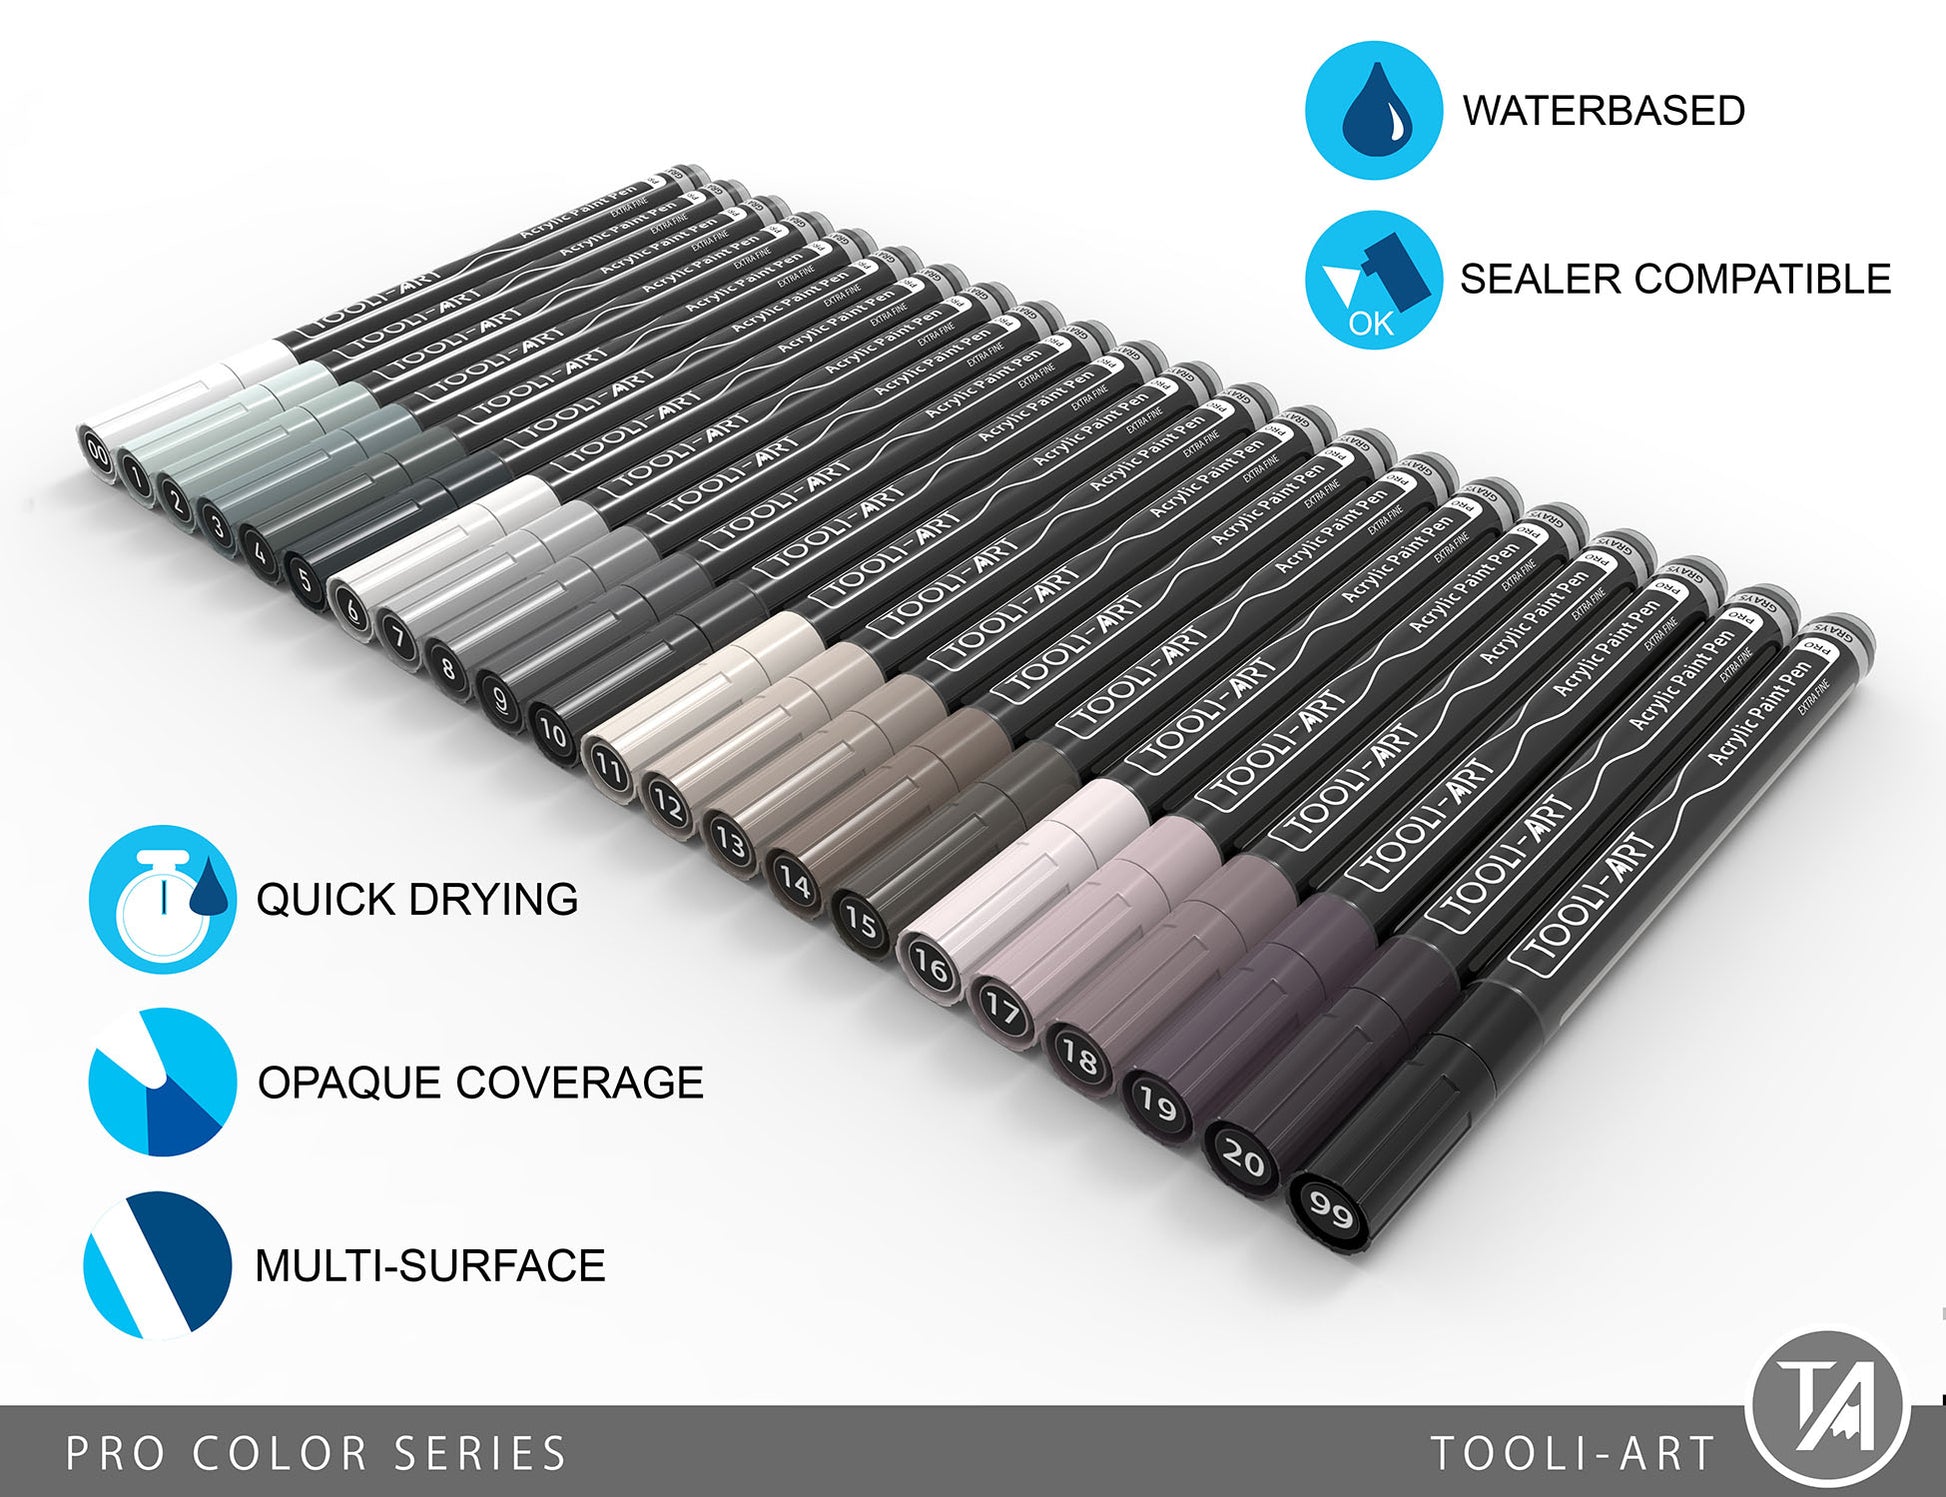 Tooli-Art Acrylic Paint Pens 22 Set Pro Color Series Gray Extra Fine